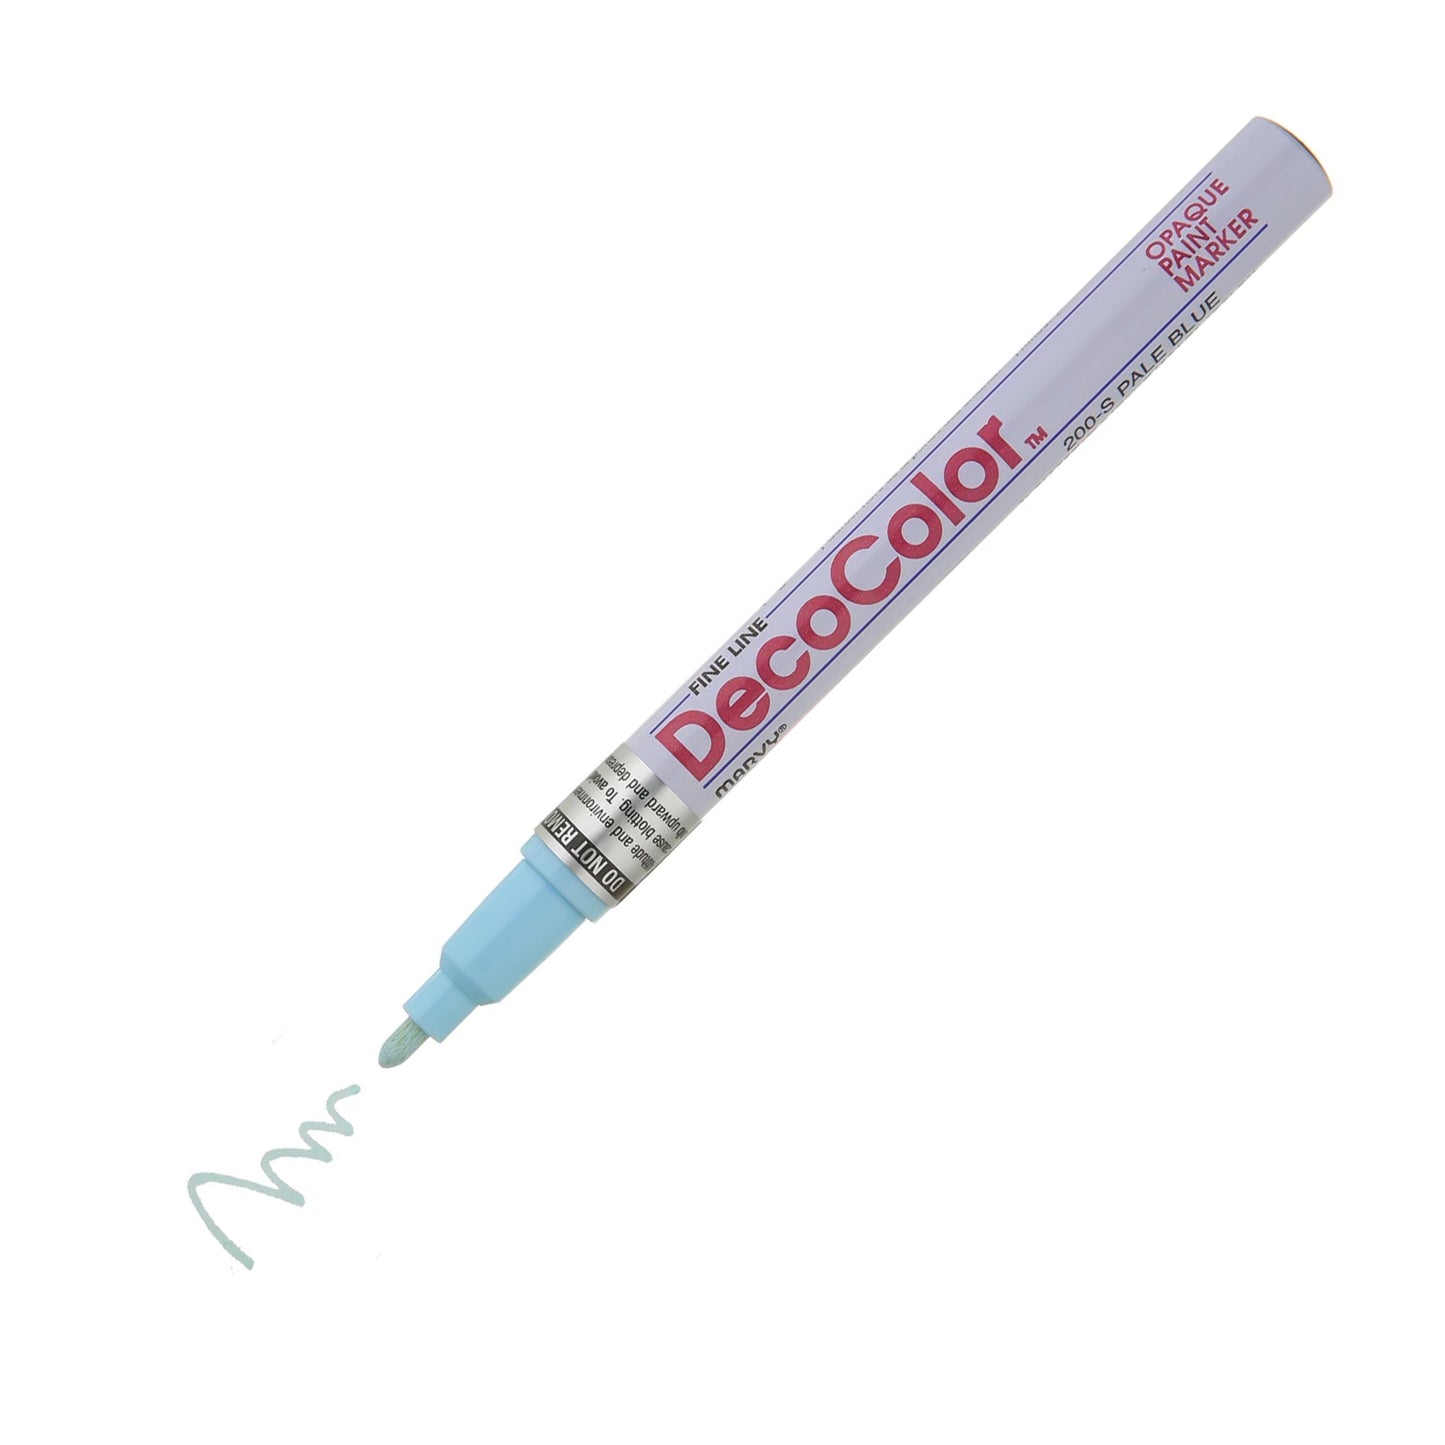 Pennarello a vernice Decocolor, punta fine da 3 mm